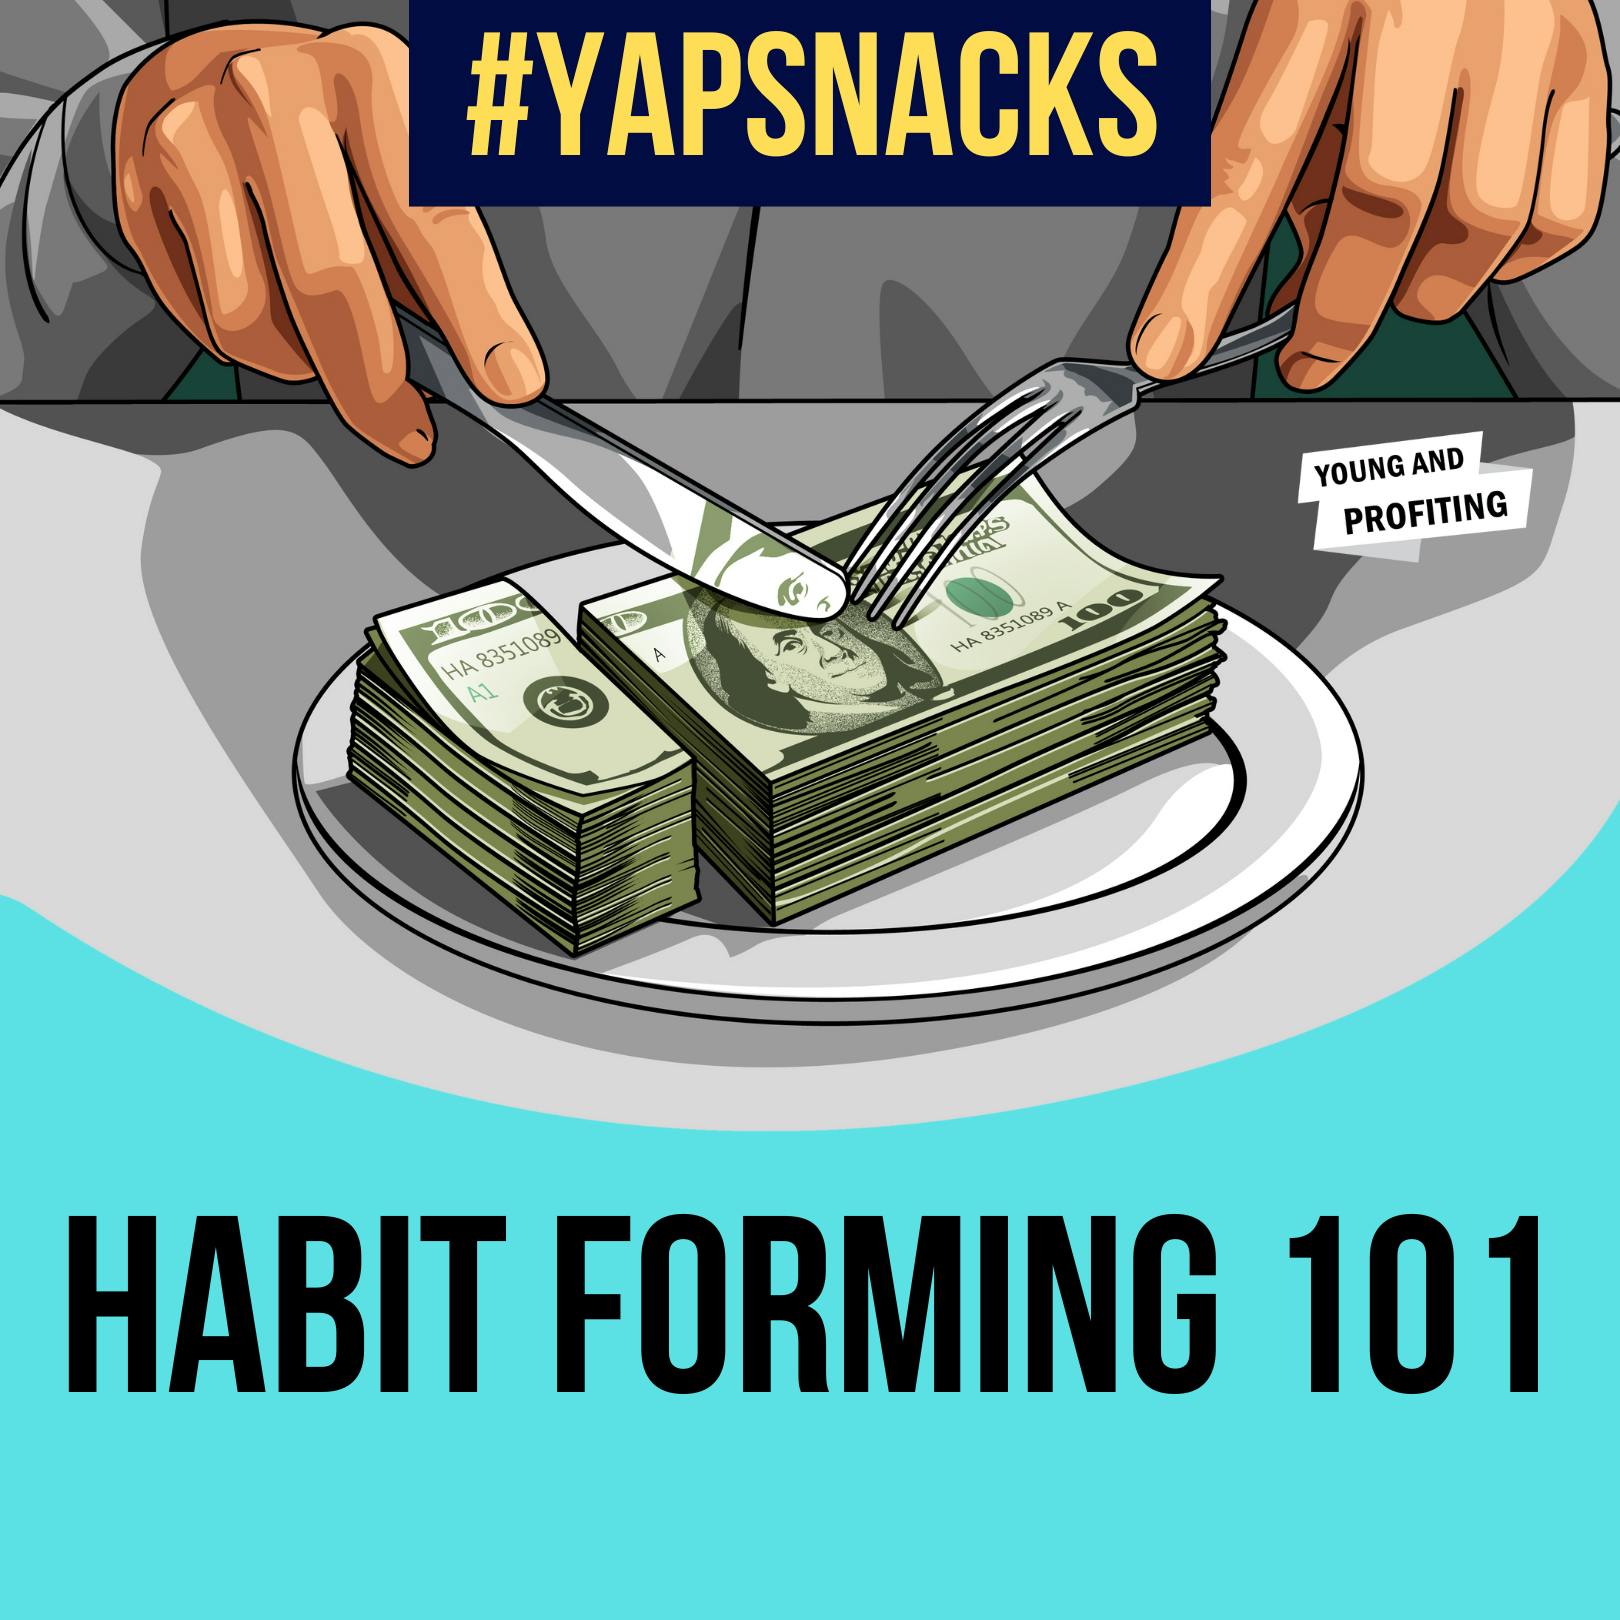 #YAPSnacks: Habit Formation 101